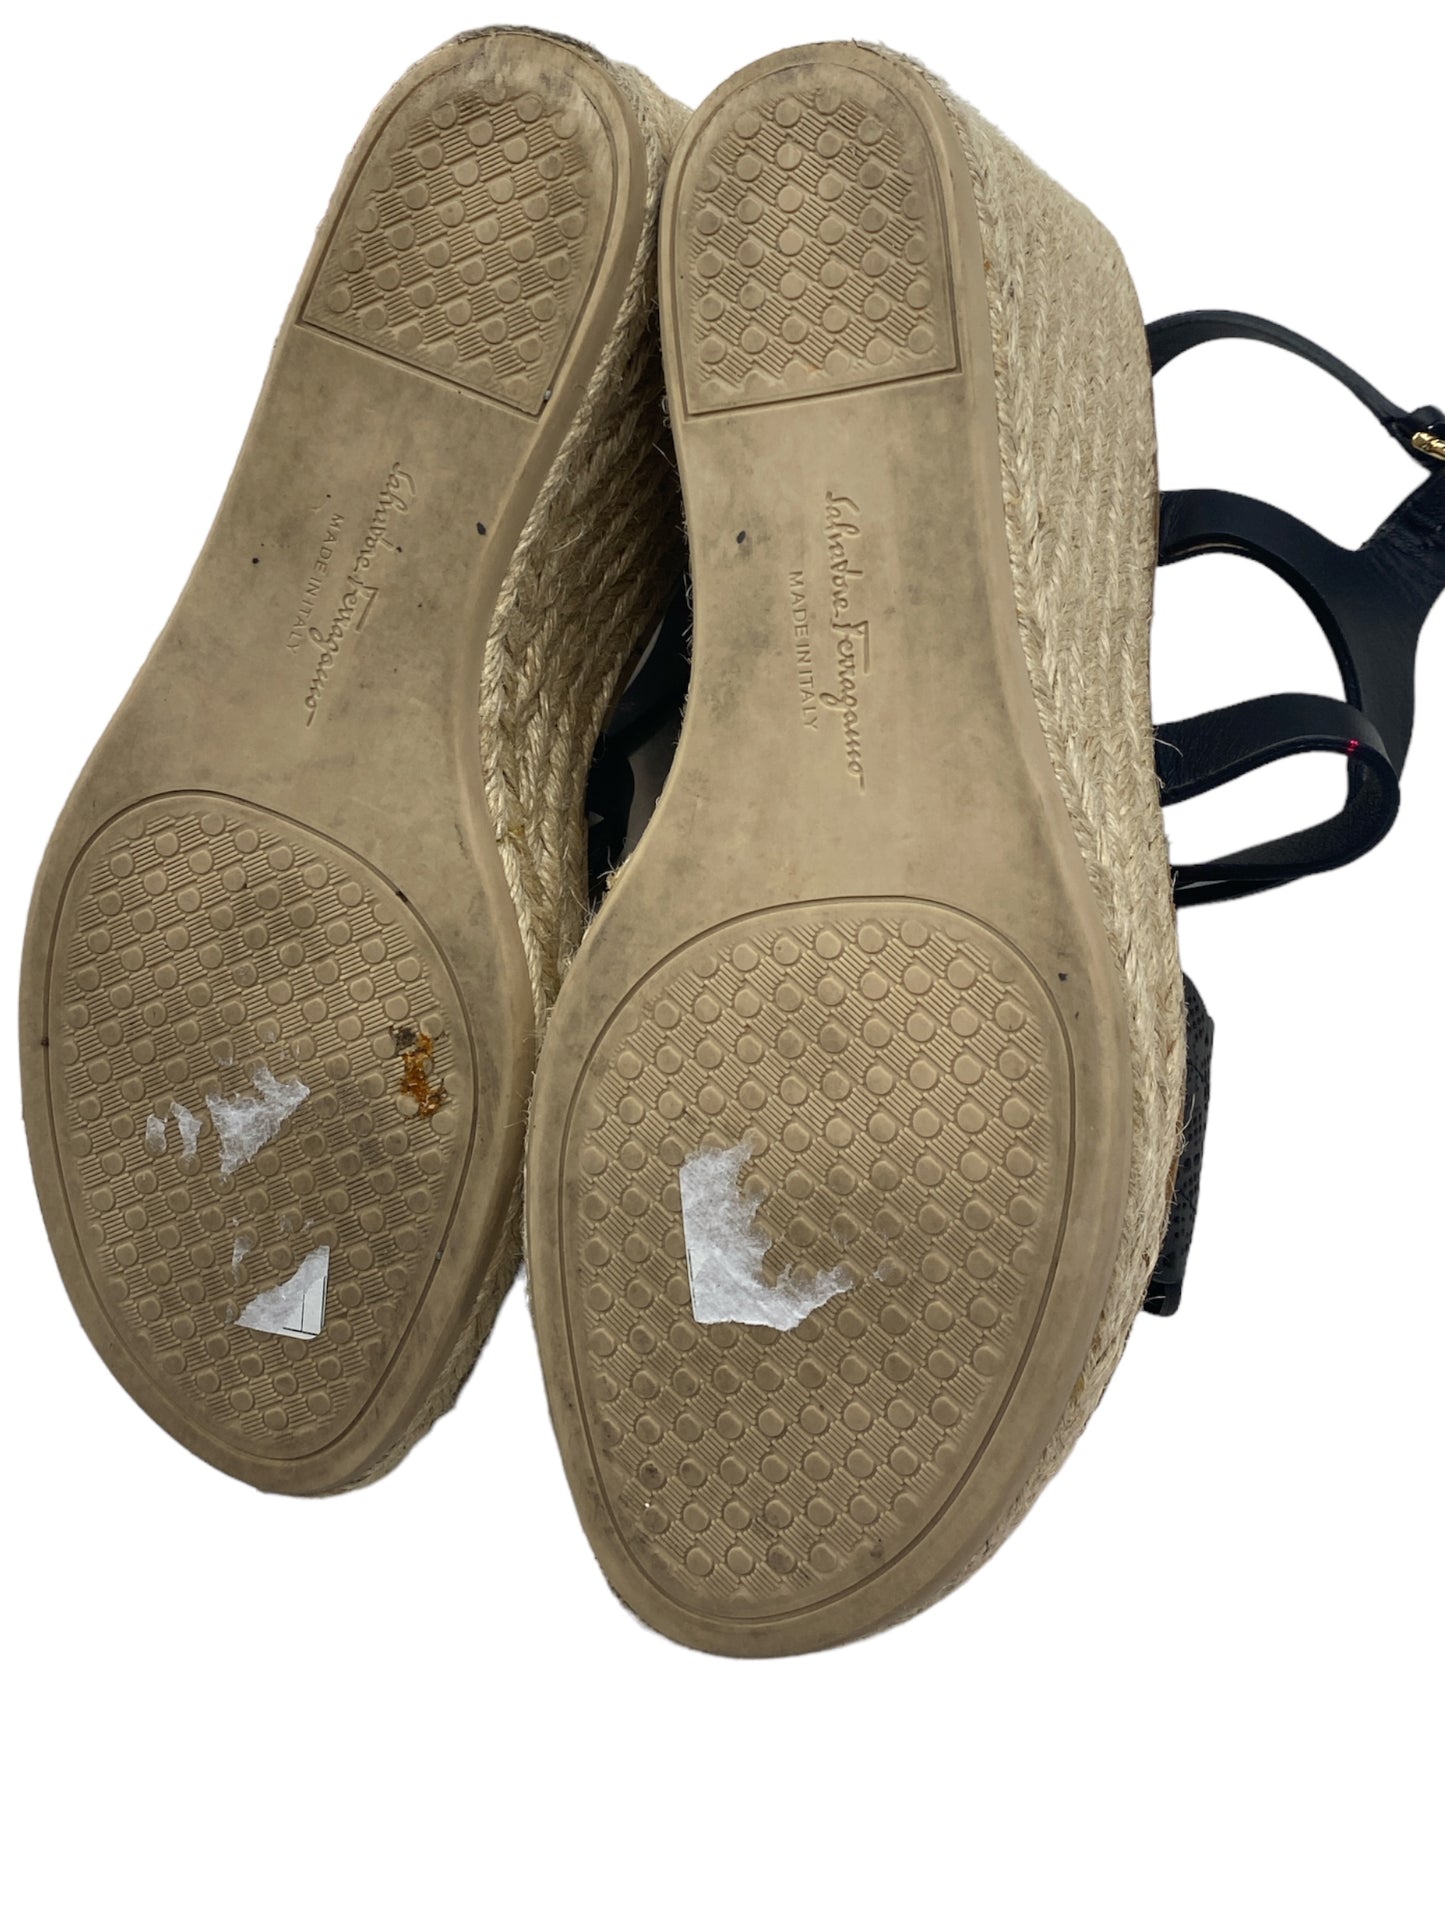 Sandals Heels Wedge By Salvatore Ferragamo  Size: 9